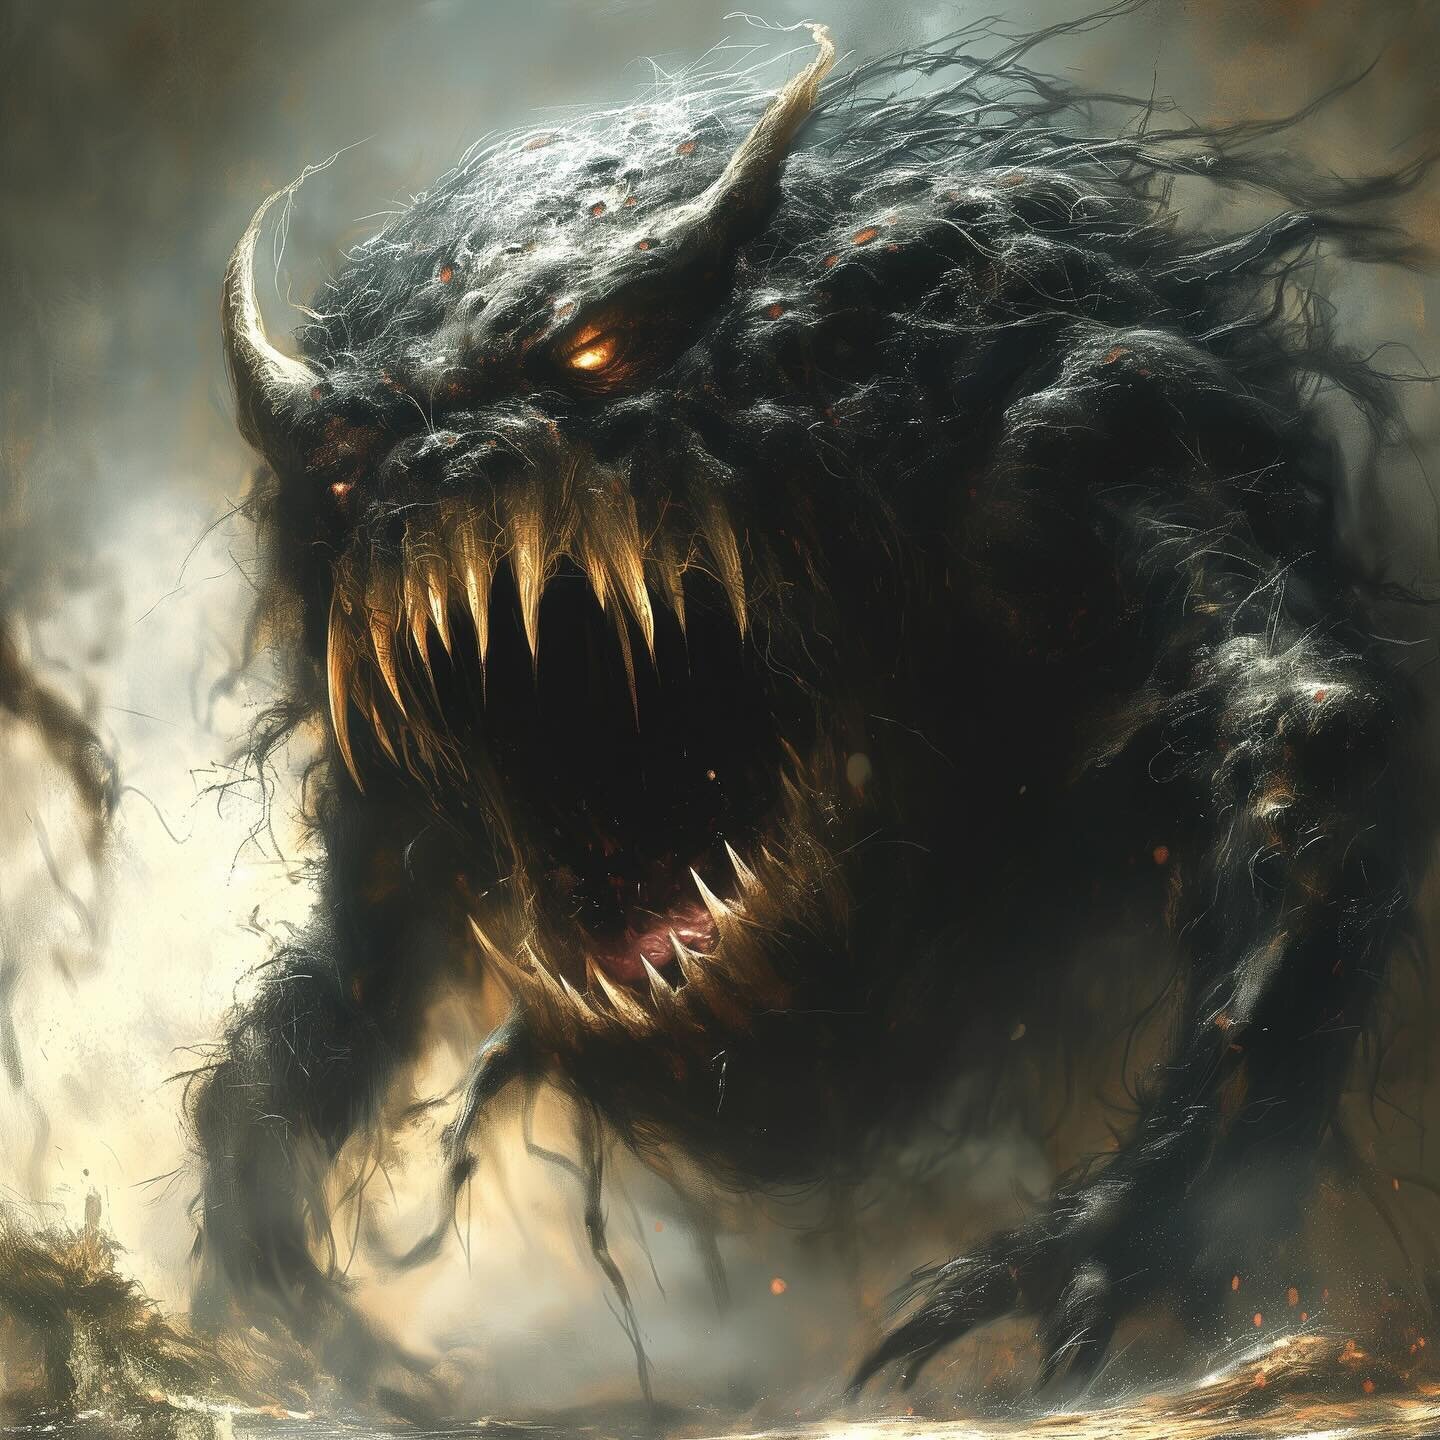 A new Dungeons &amp; Dragons monster: The Bezoar

Made with MidJourney v6

#aiart #aigeneratedart #generativeart #digitalart #art #aiartcommunity #midjourney #midjourneyai #midjourneyv6 #dnd #fantasyart #dungeonsanddragons #monster #beast #bezoar